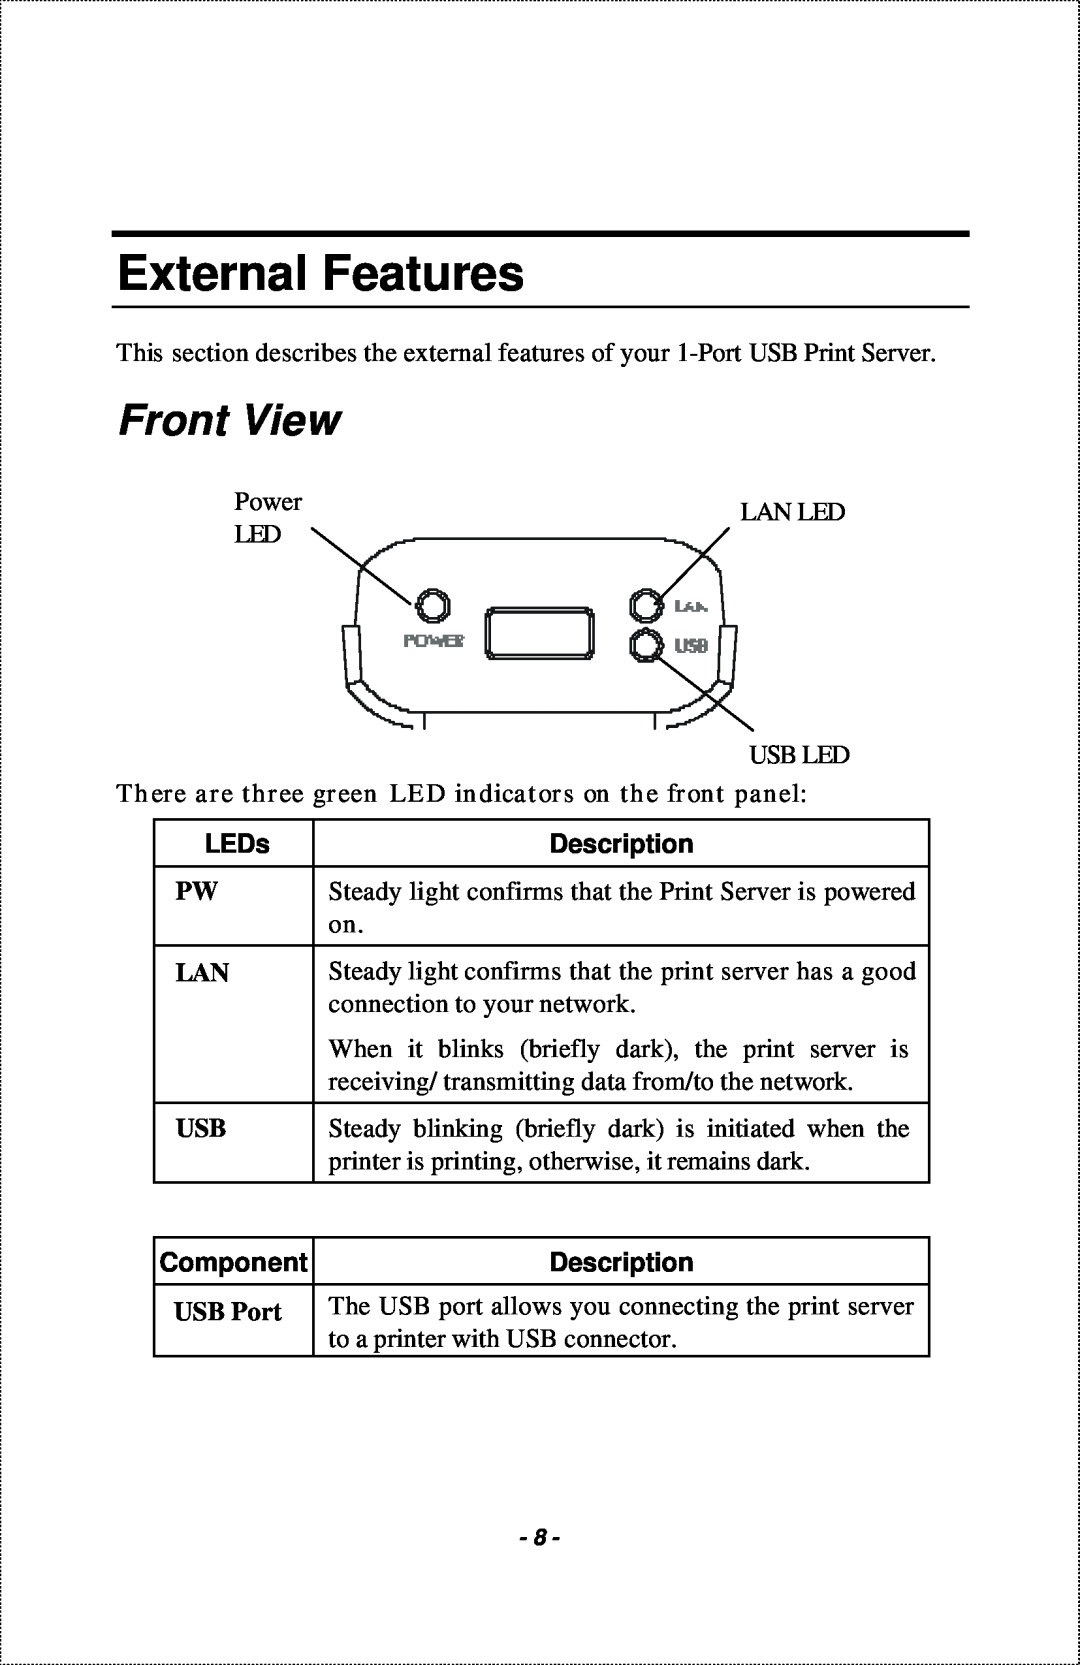 IBM 1-Port USB Print Server manual External Features, Front View, LEDs, Description, Component, USB Port 